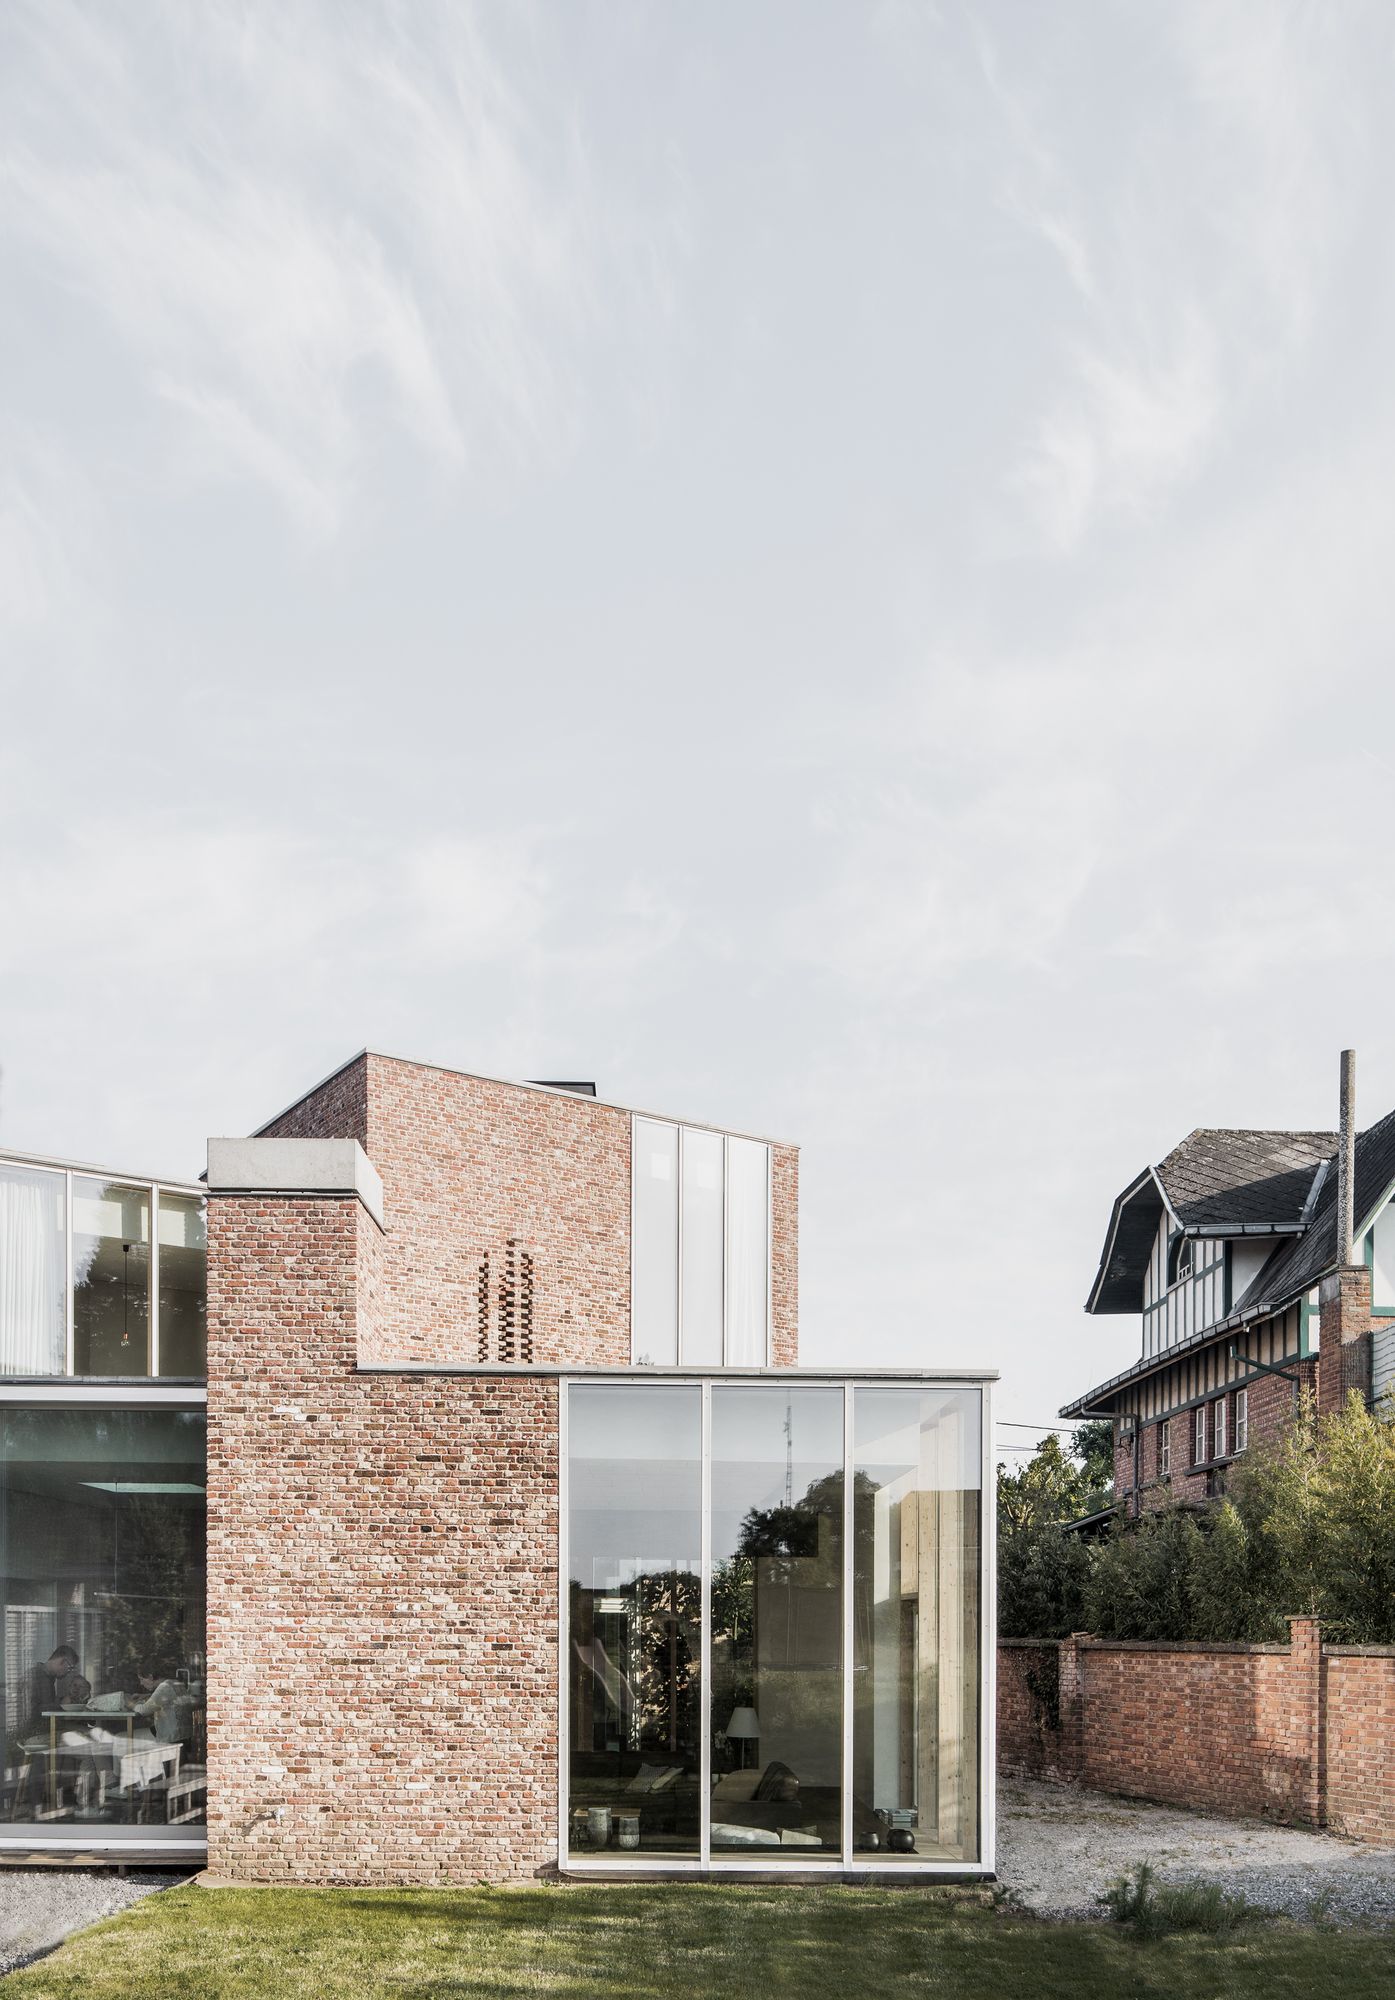 House LC by Graux & Baeyens